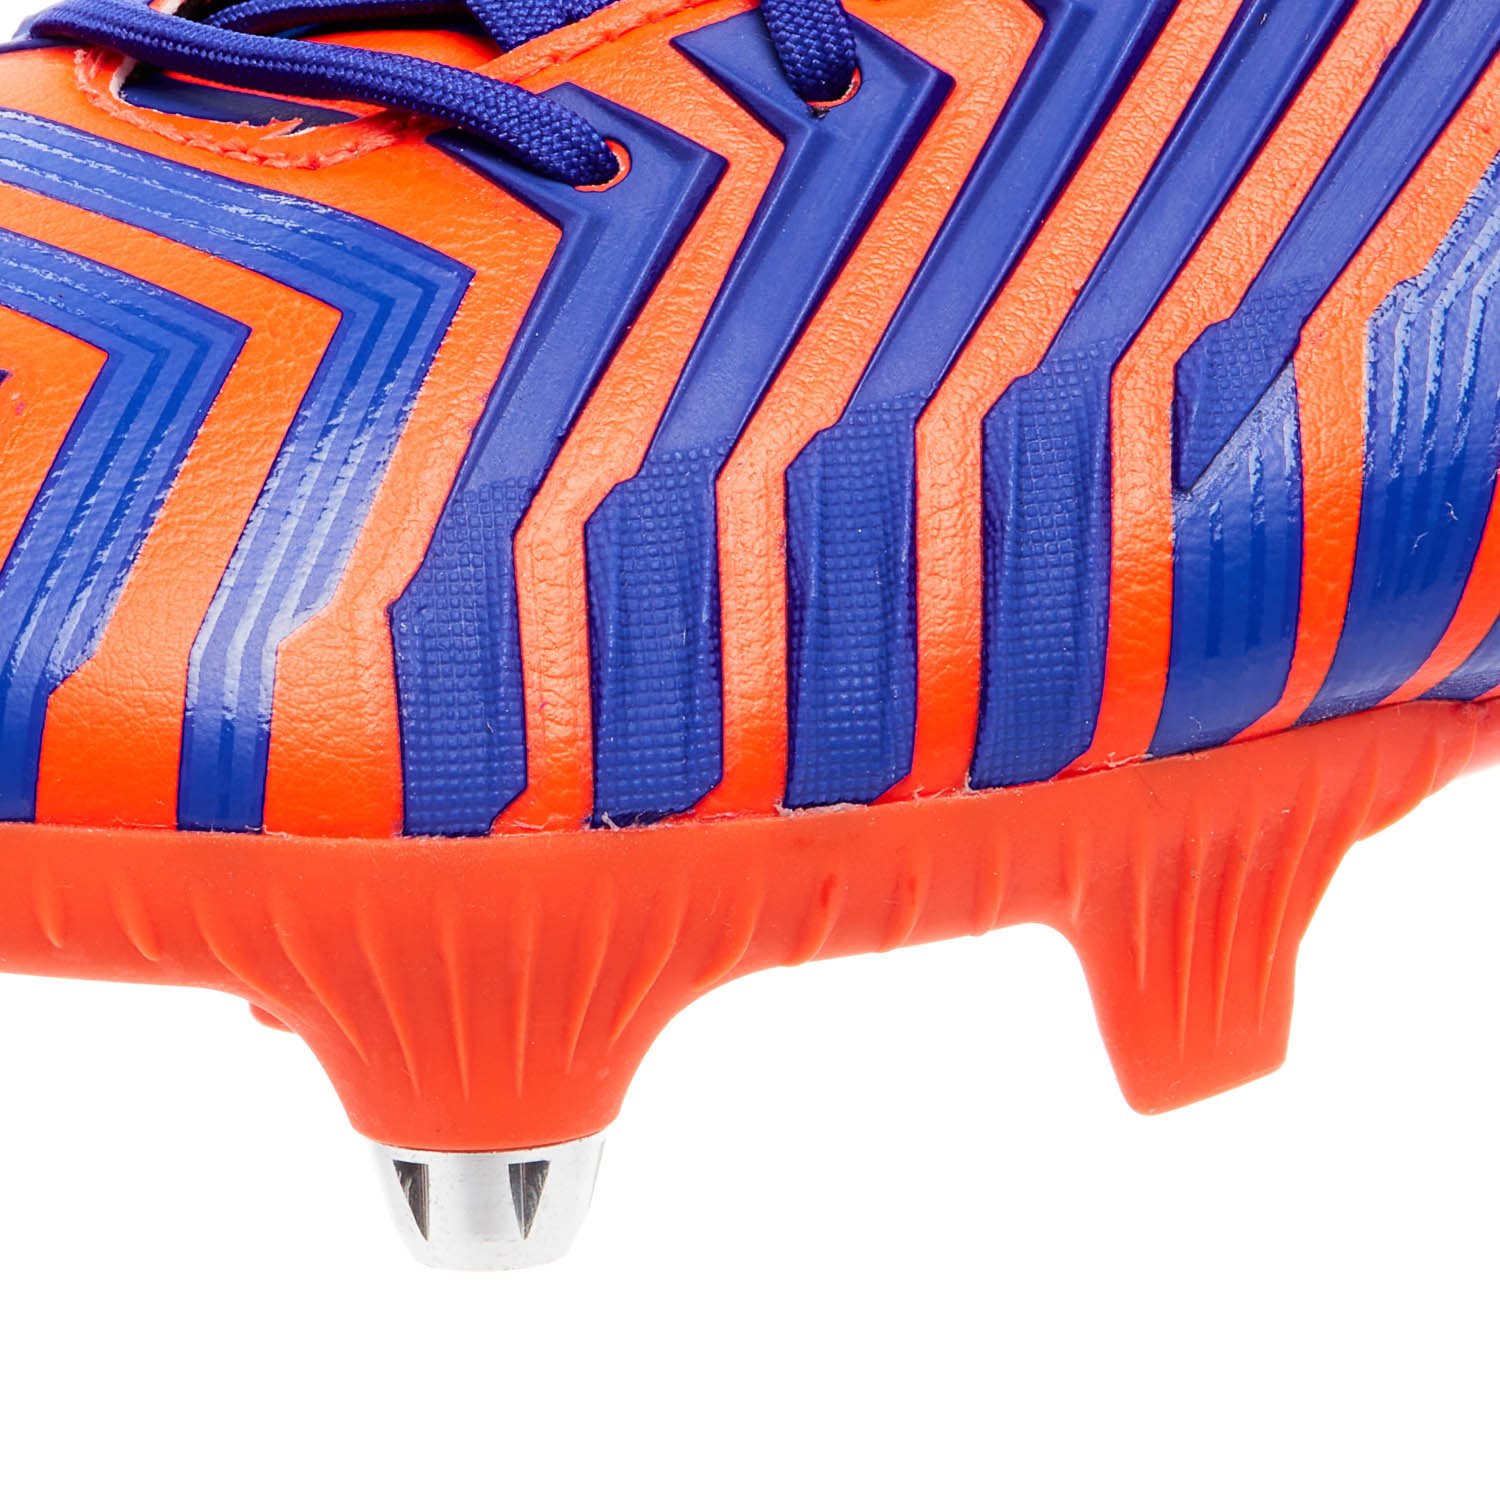 wrijving ik heb honger Shilling 2015 adidas Predator Instinct Champions League Football Boots *In Box* SG 6